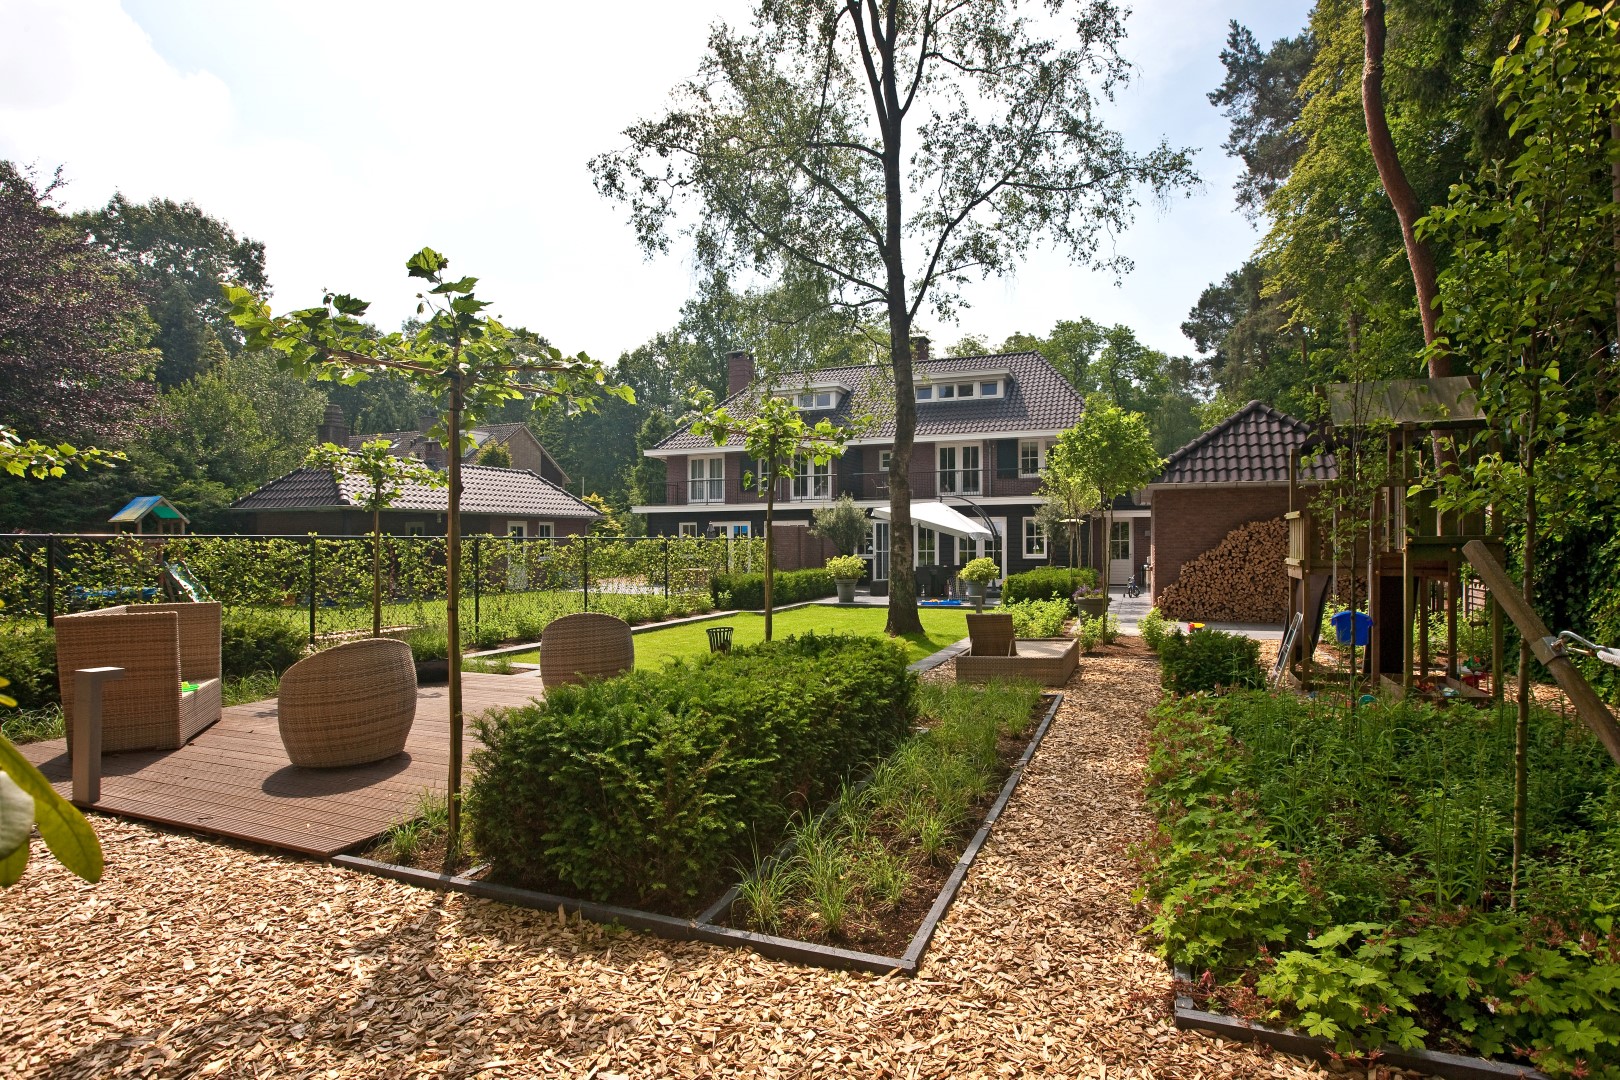 Foto: Huis bouwen   Ruime tuin achter de villas   Lichtenberg Exclusieve Villabouw